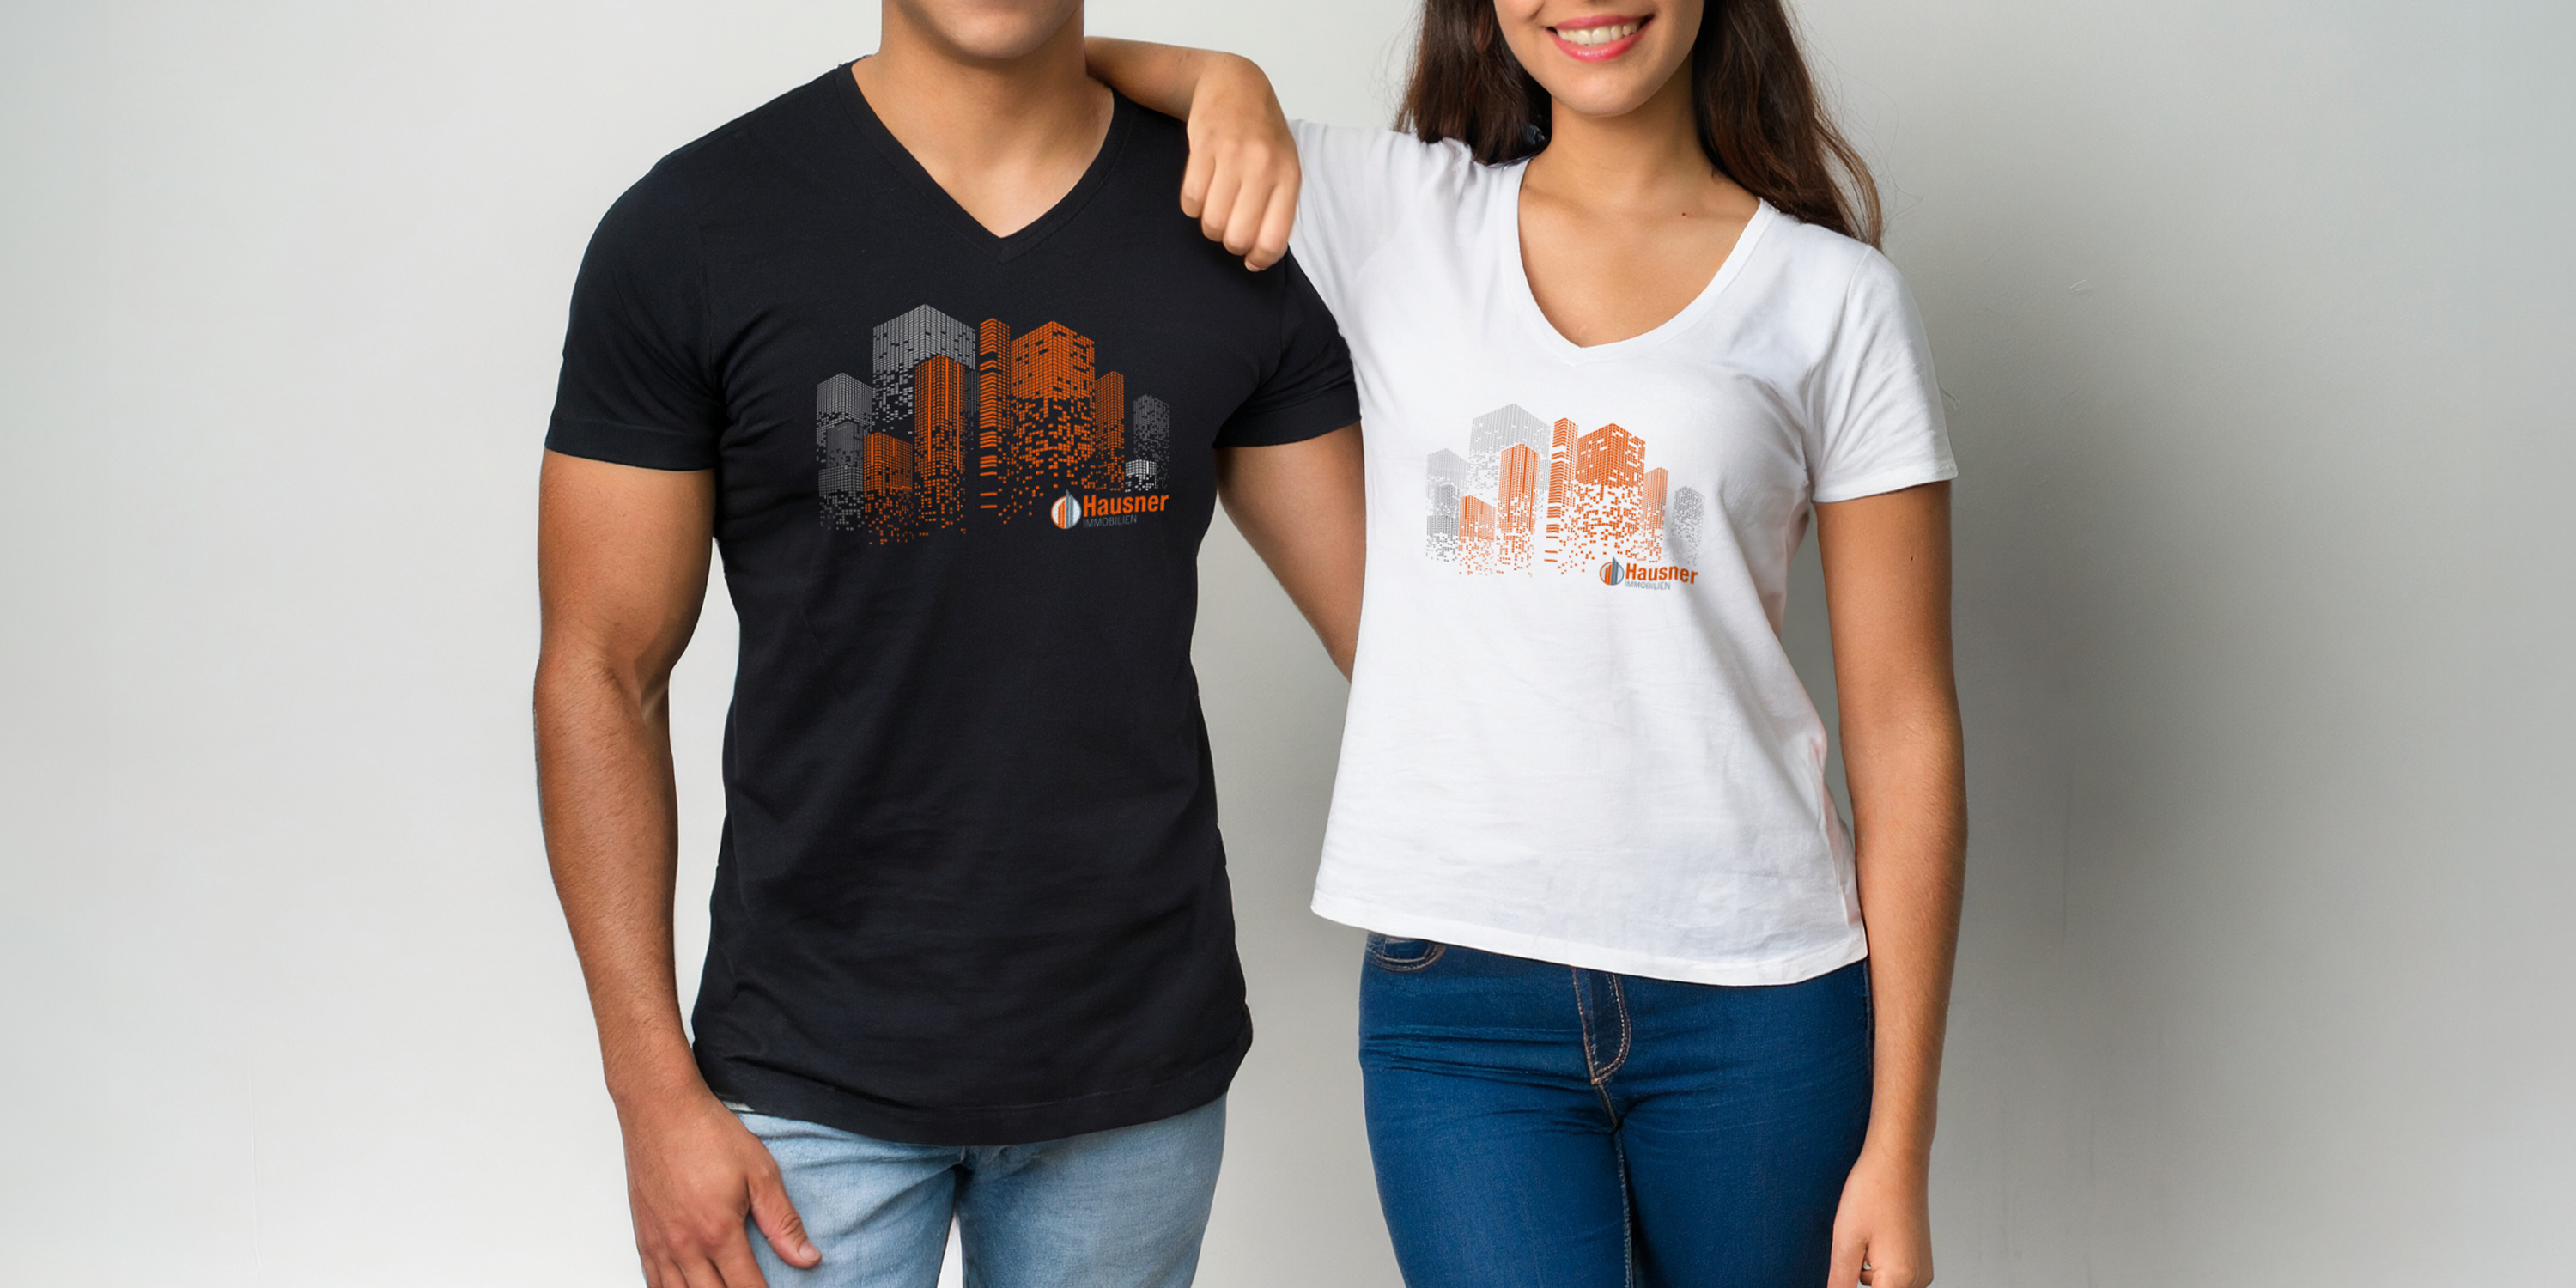 Zwei Personen tragen individuell bedruckte T-Shirts mit V-Ausschnitt